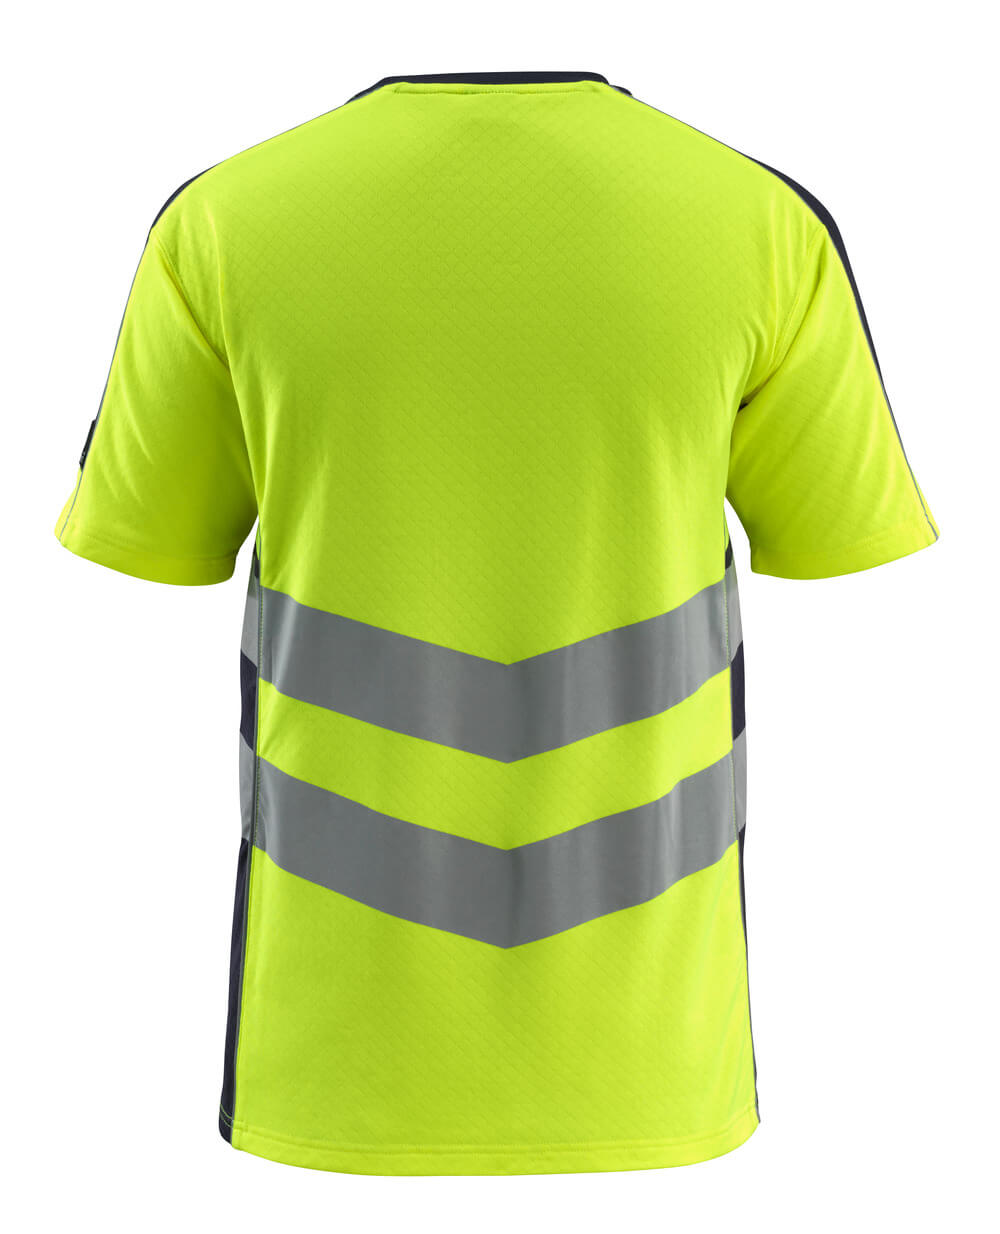 Mascot SAFE SUPREME  Sandwell T-shirt 50127 hi-vis yellow/dark navy